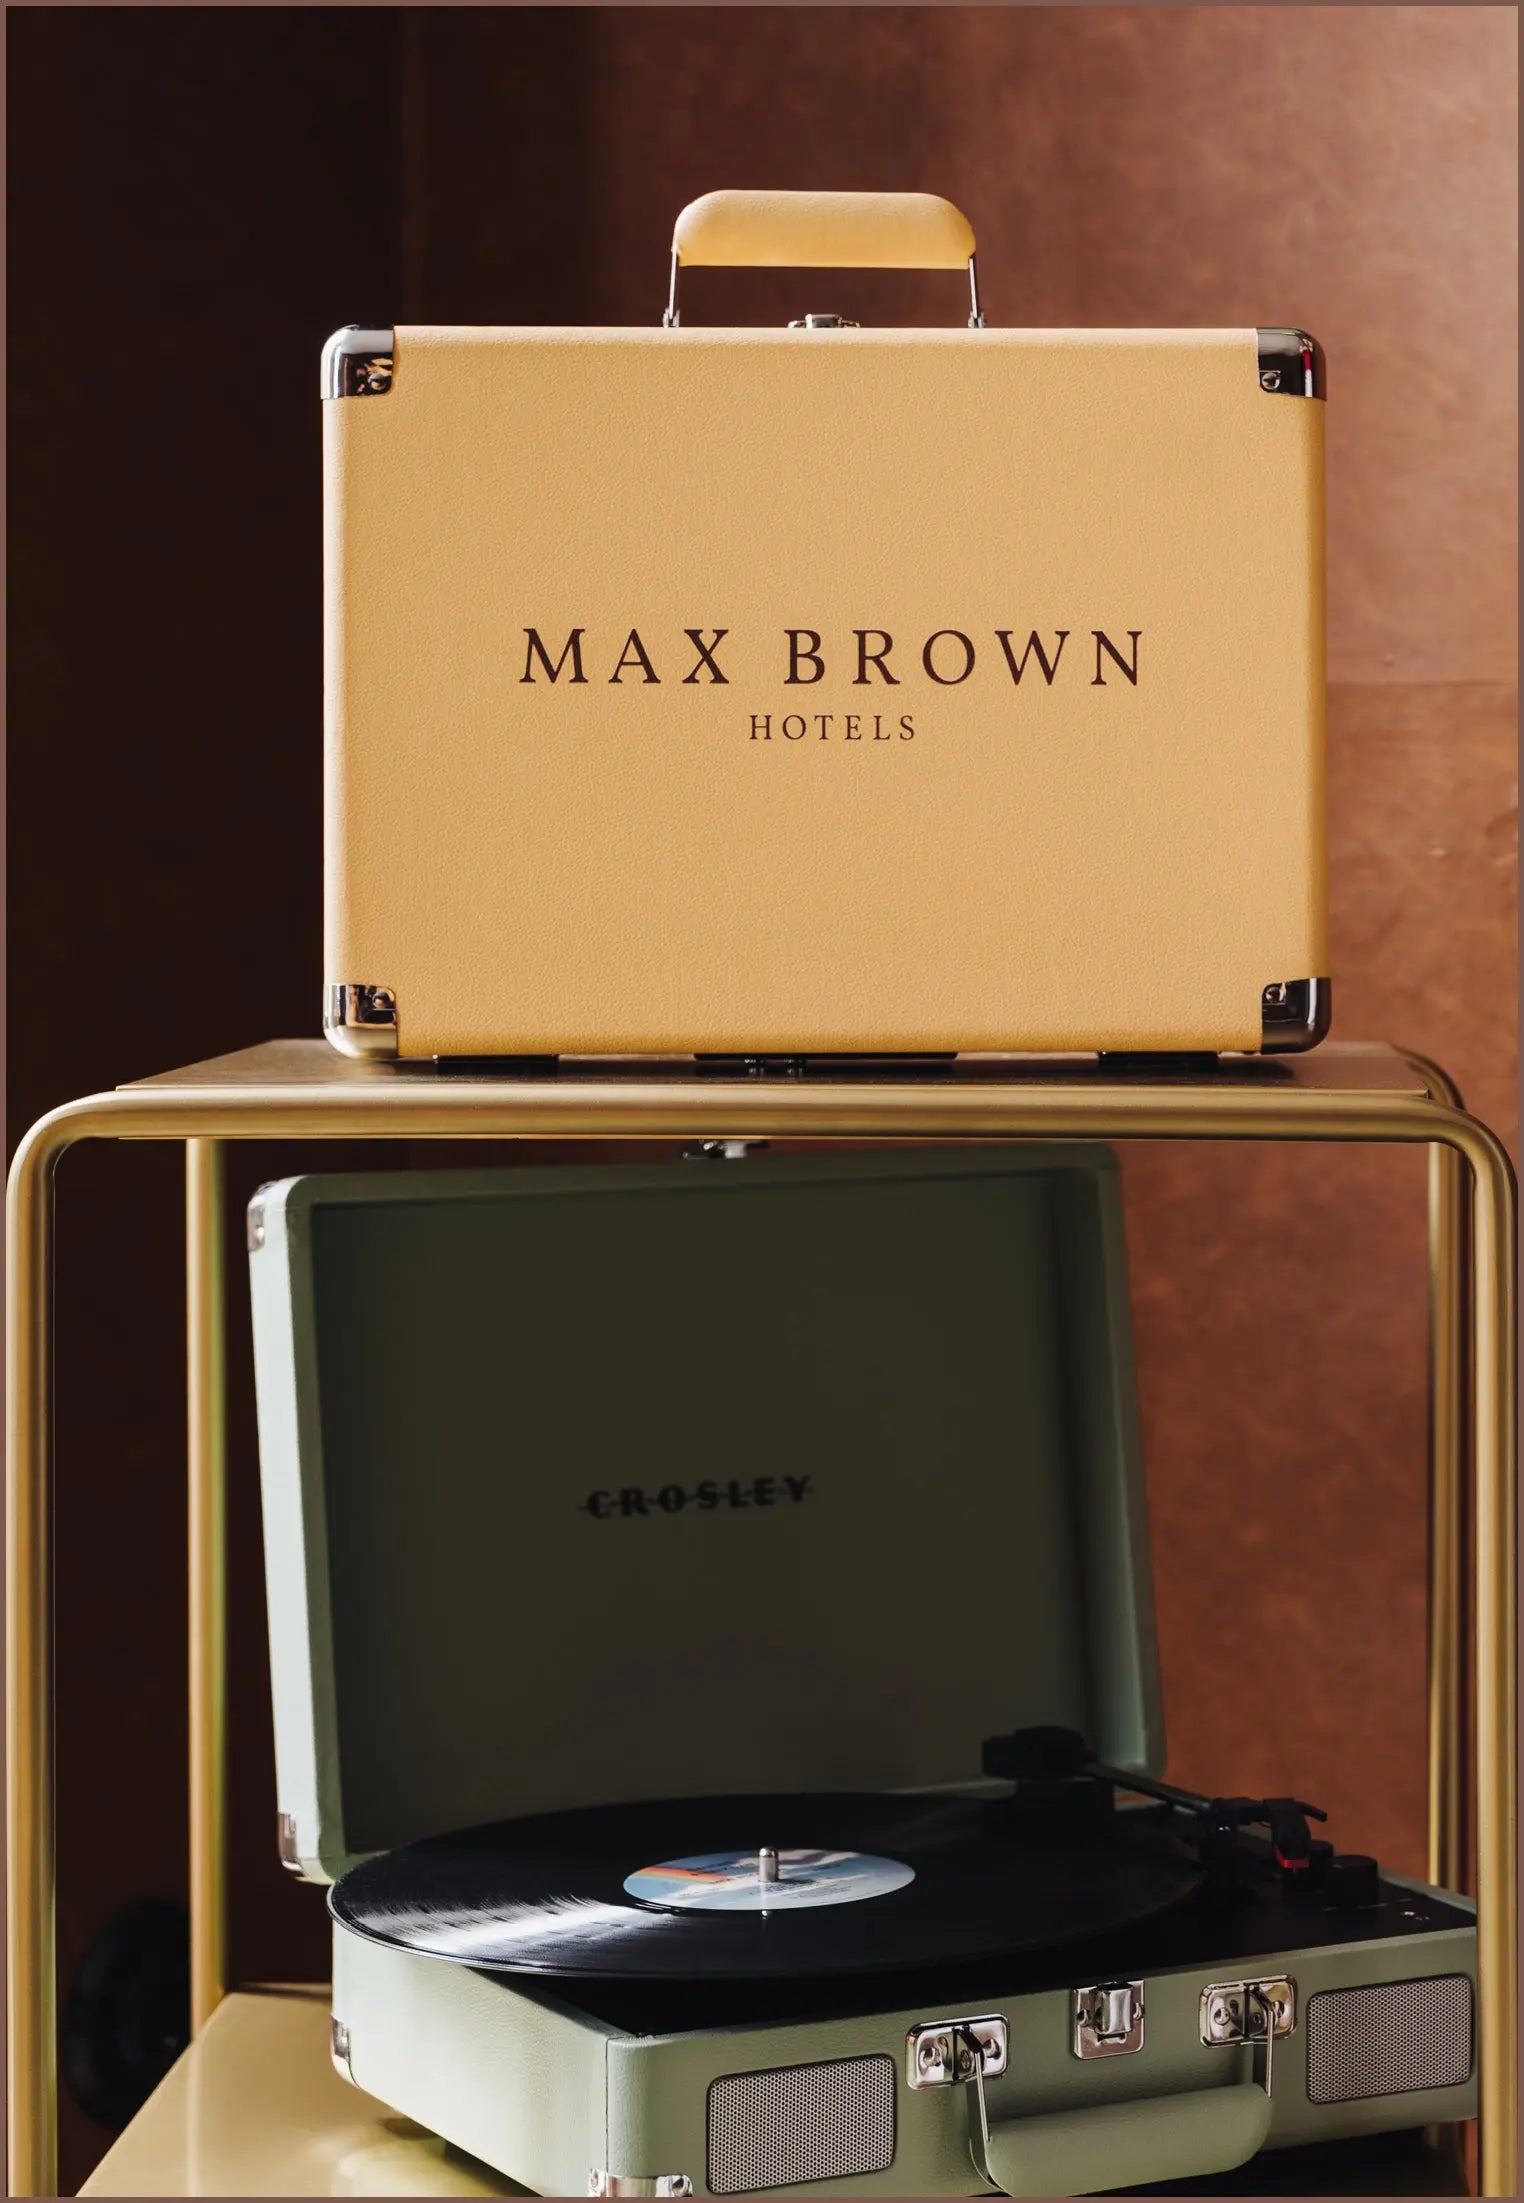 Max Brown x Crosley Bluetooth record player | FAWN Crosley Radio Europe